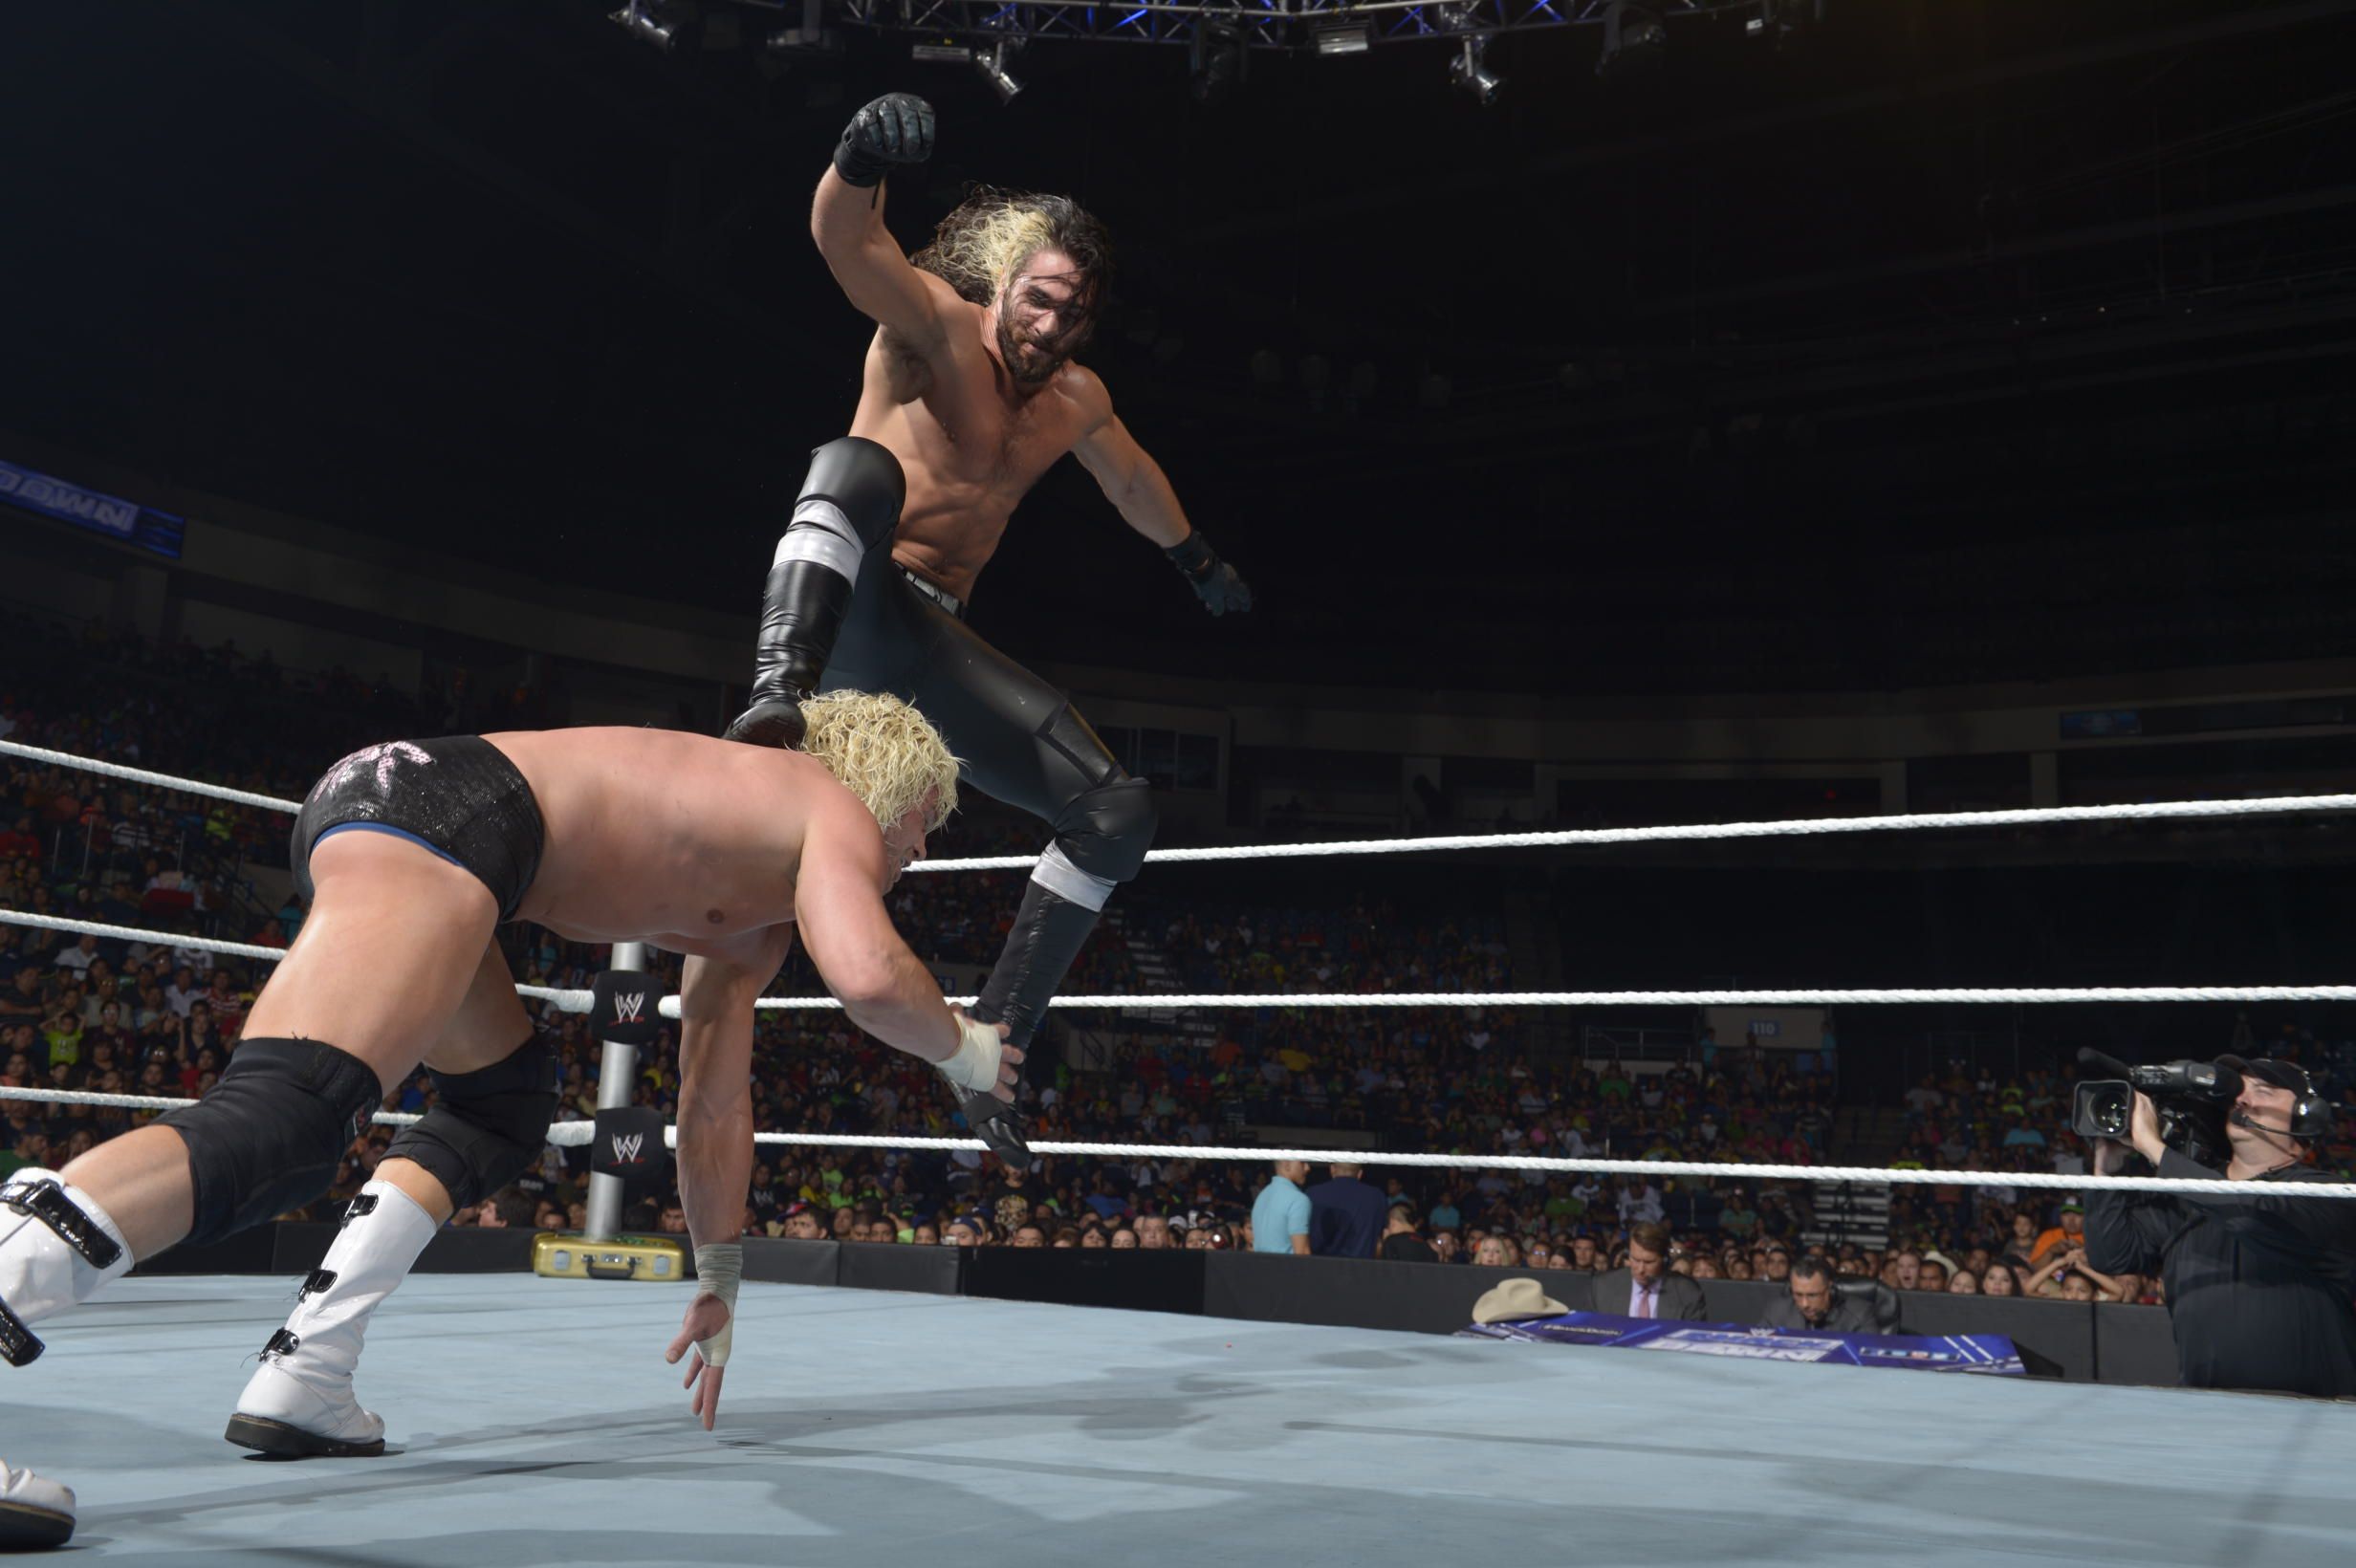 Nikki Bella vs. Naomi - Divas Title Match: WWE Extreme Rules 2015